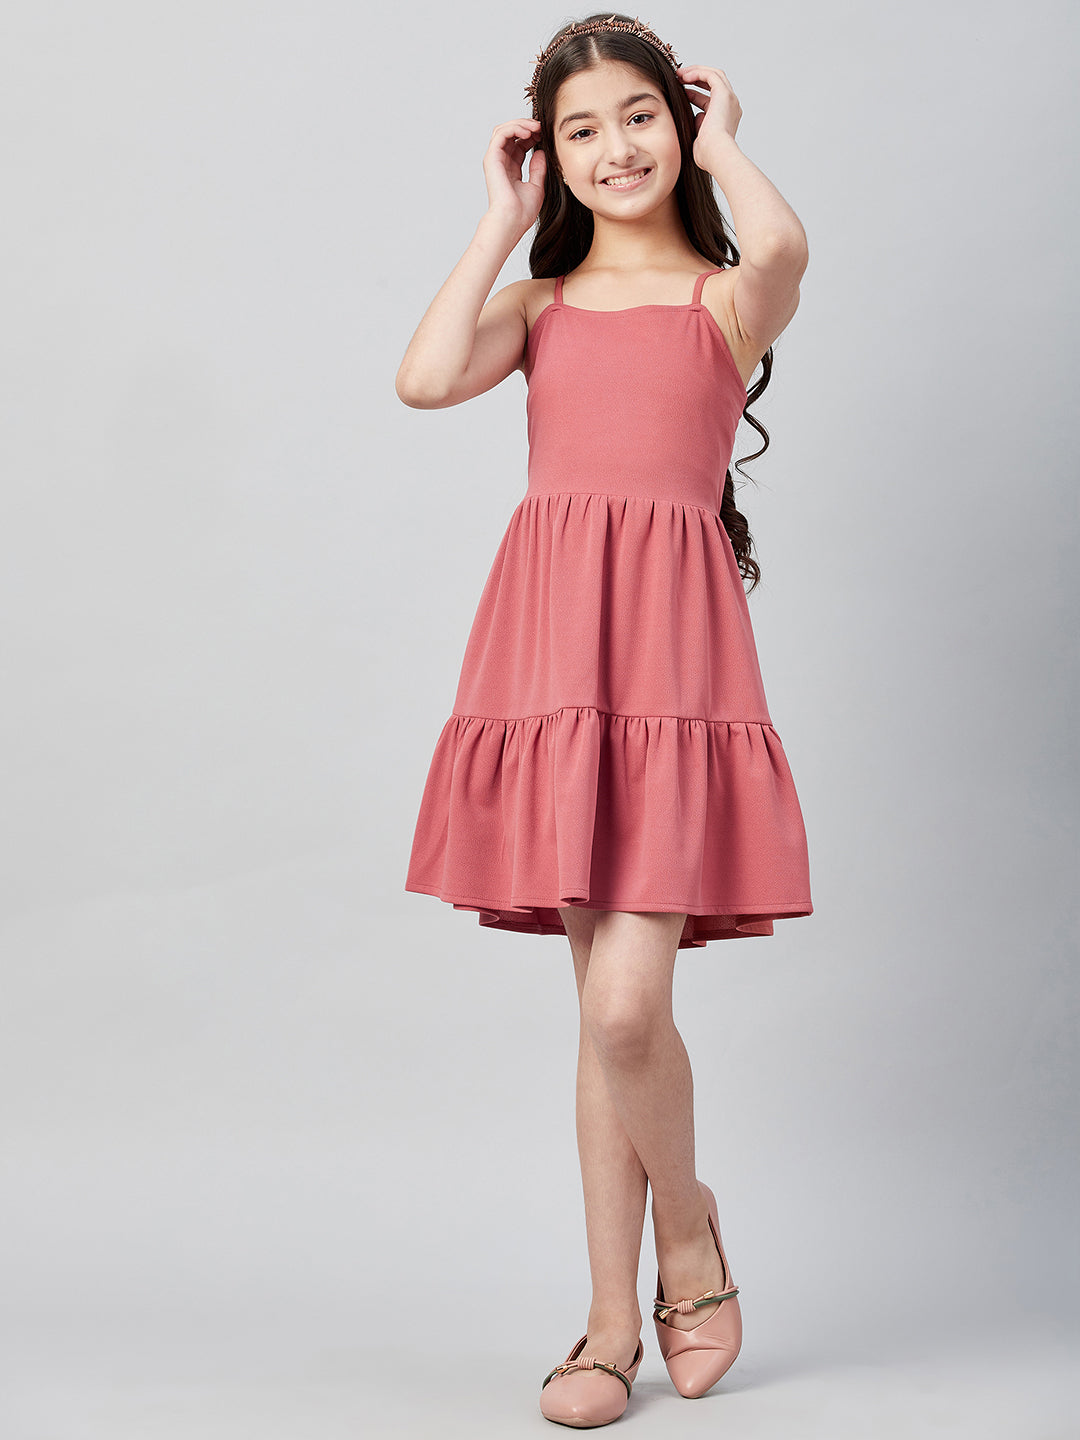 Athena Girl Pink Layered Dress - Athena Lifestyle